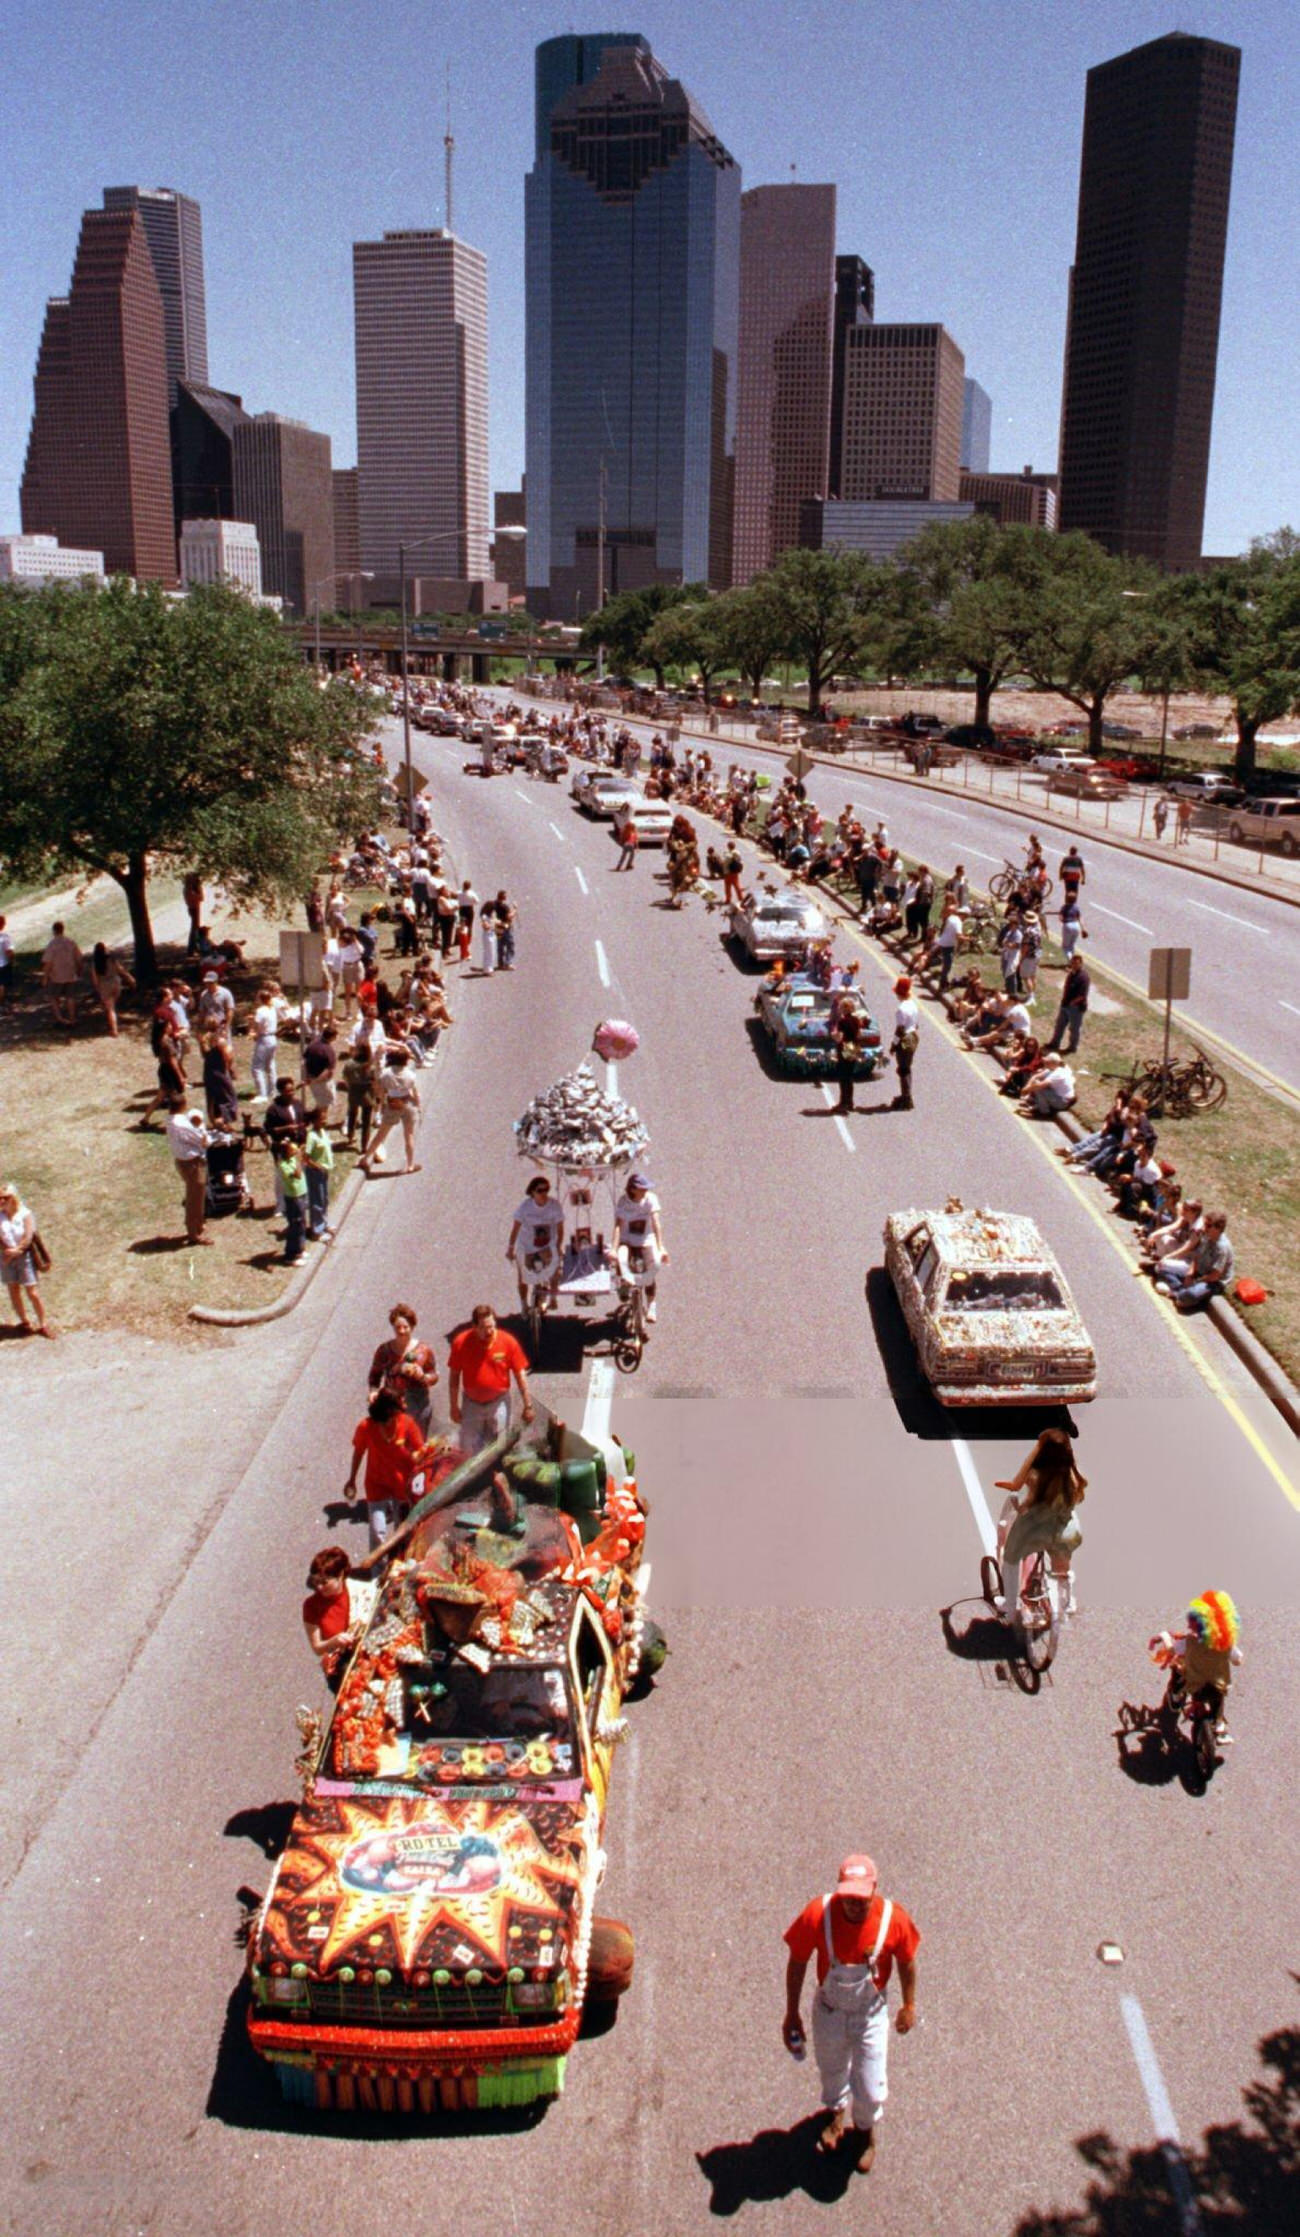 The 12th Annual Art Car Parade along Allen Parkway, Houston, Texas, 1999.